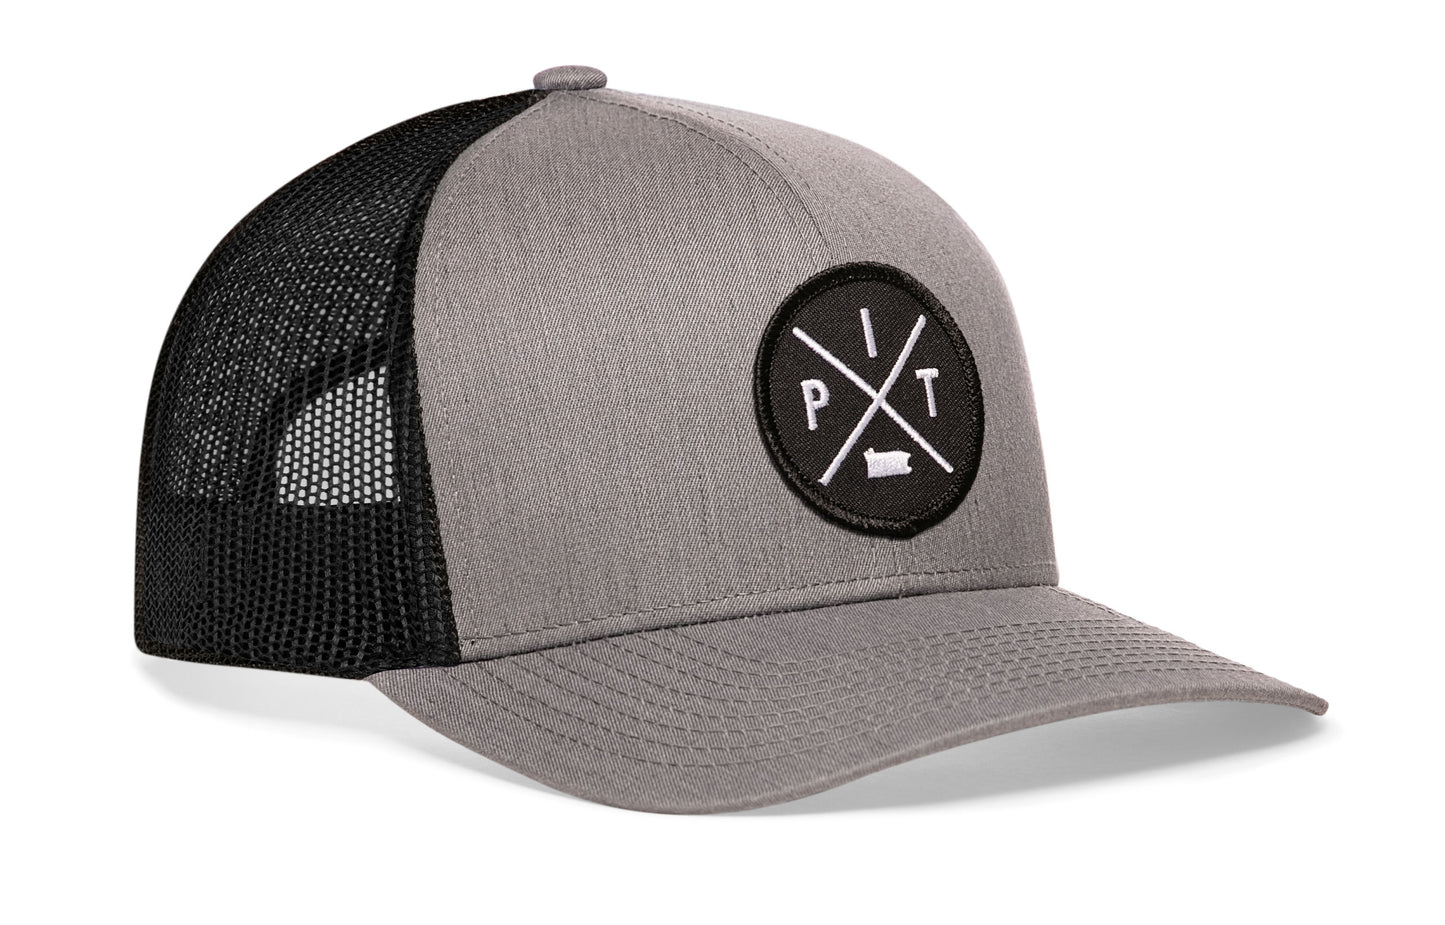 Pittsburgh Trucker Hat  |  Gray/Black PIT Snapback